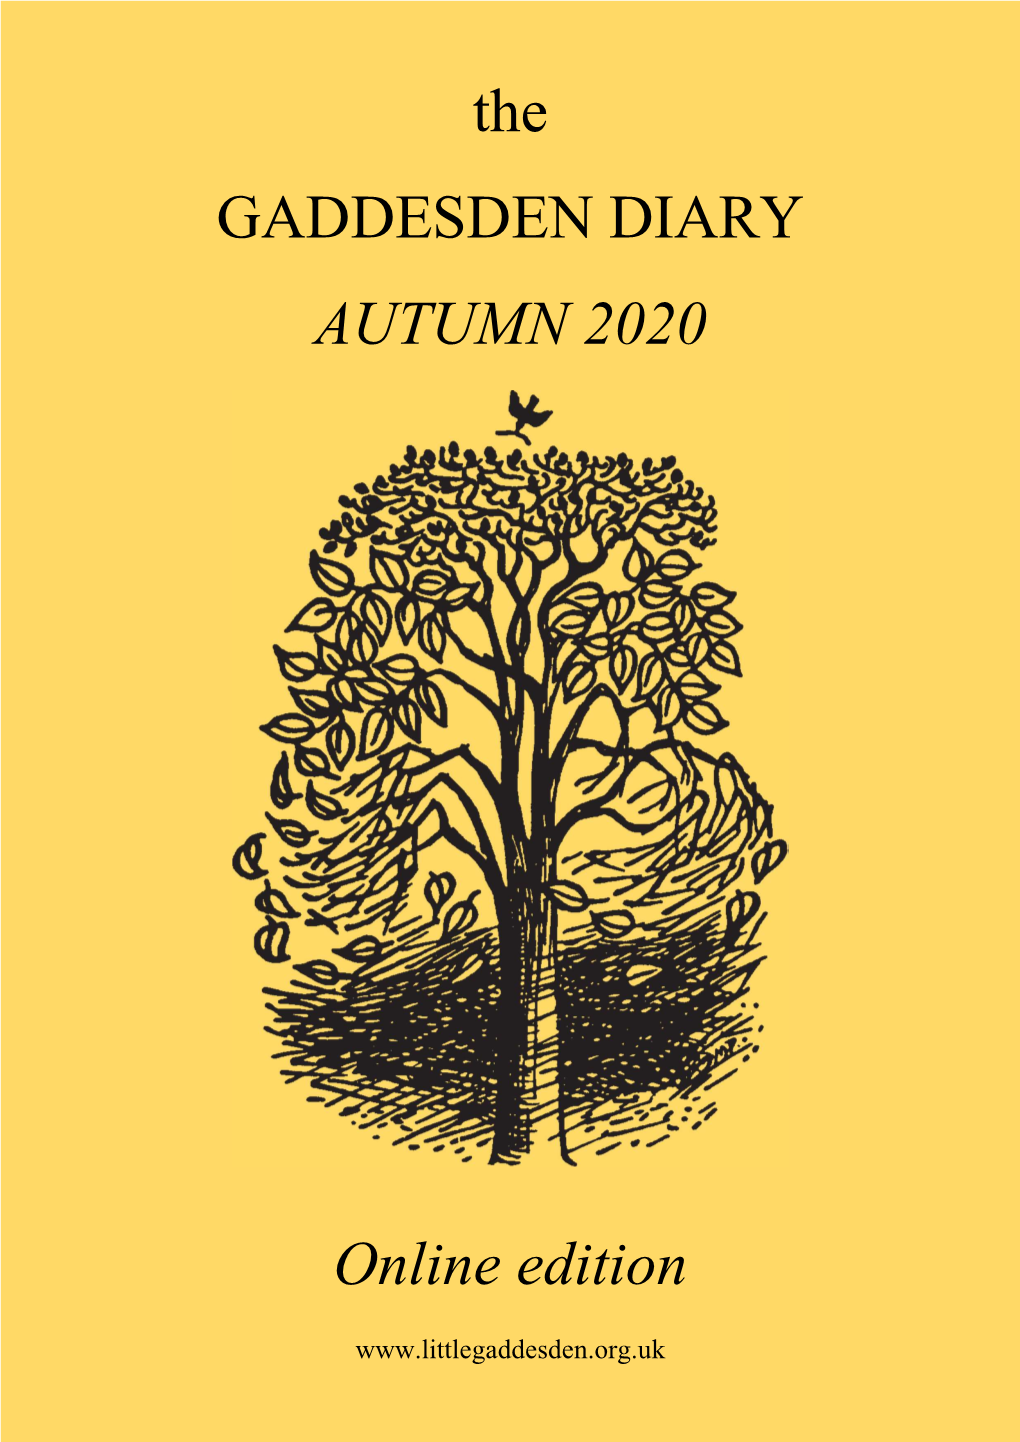 The GADDESDEN DIARY AUTUMN 2020 Online Edition